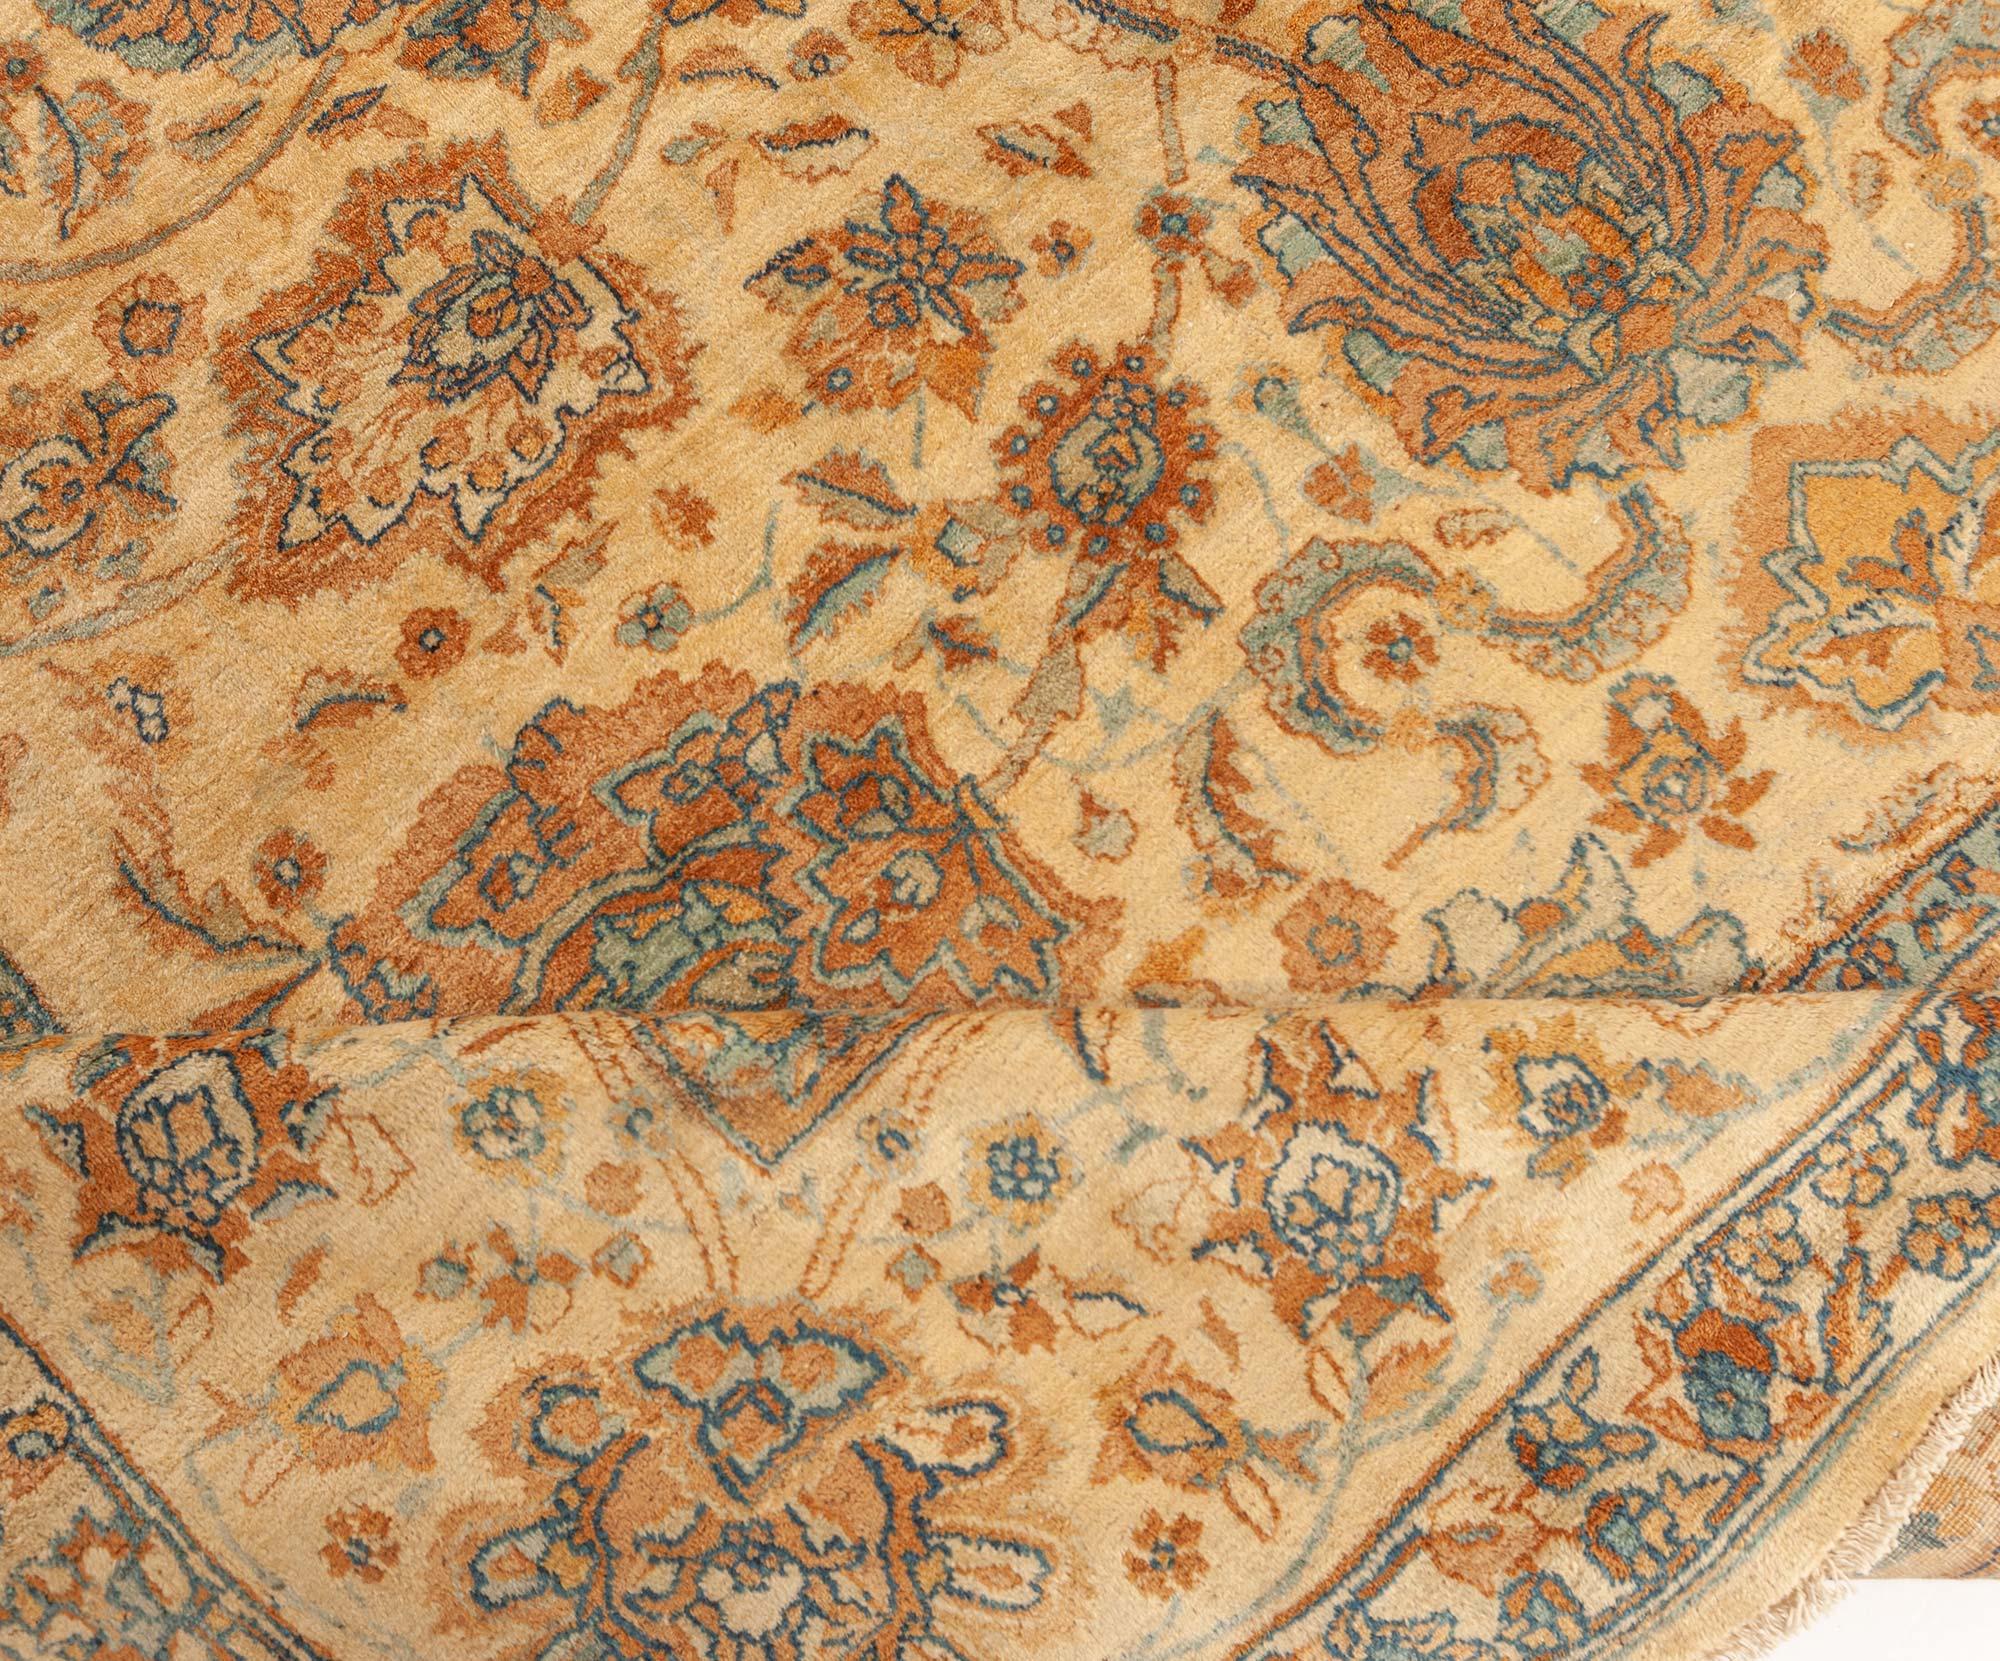 Vintage Indian Botanic handmade wool rug
Size: 12'10